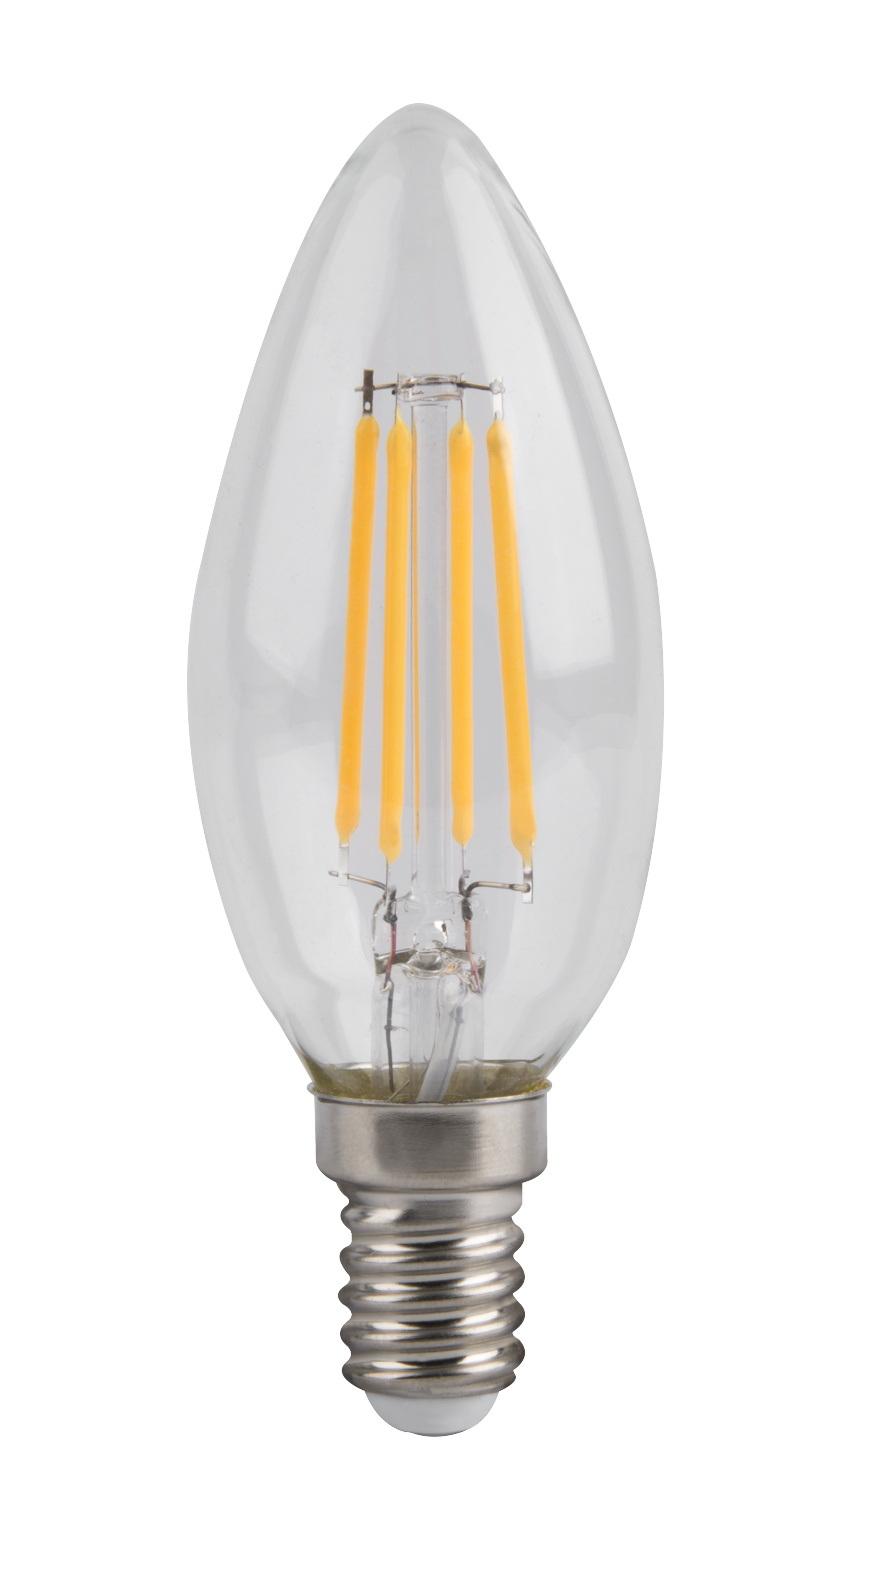 110V/220V Filament Light C37 G45 Candle 3 Volt LED Light Bulbs